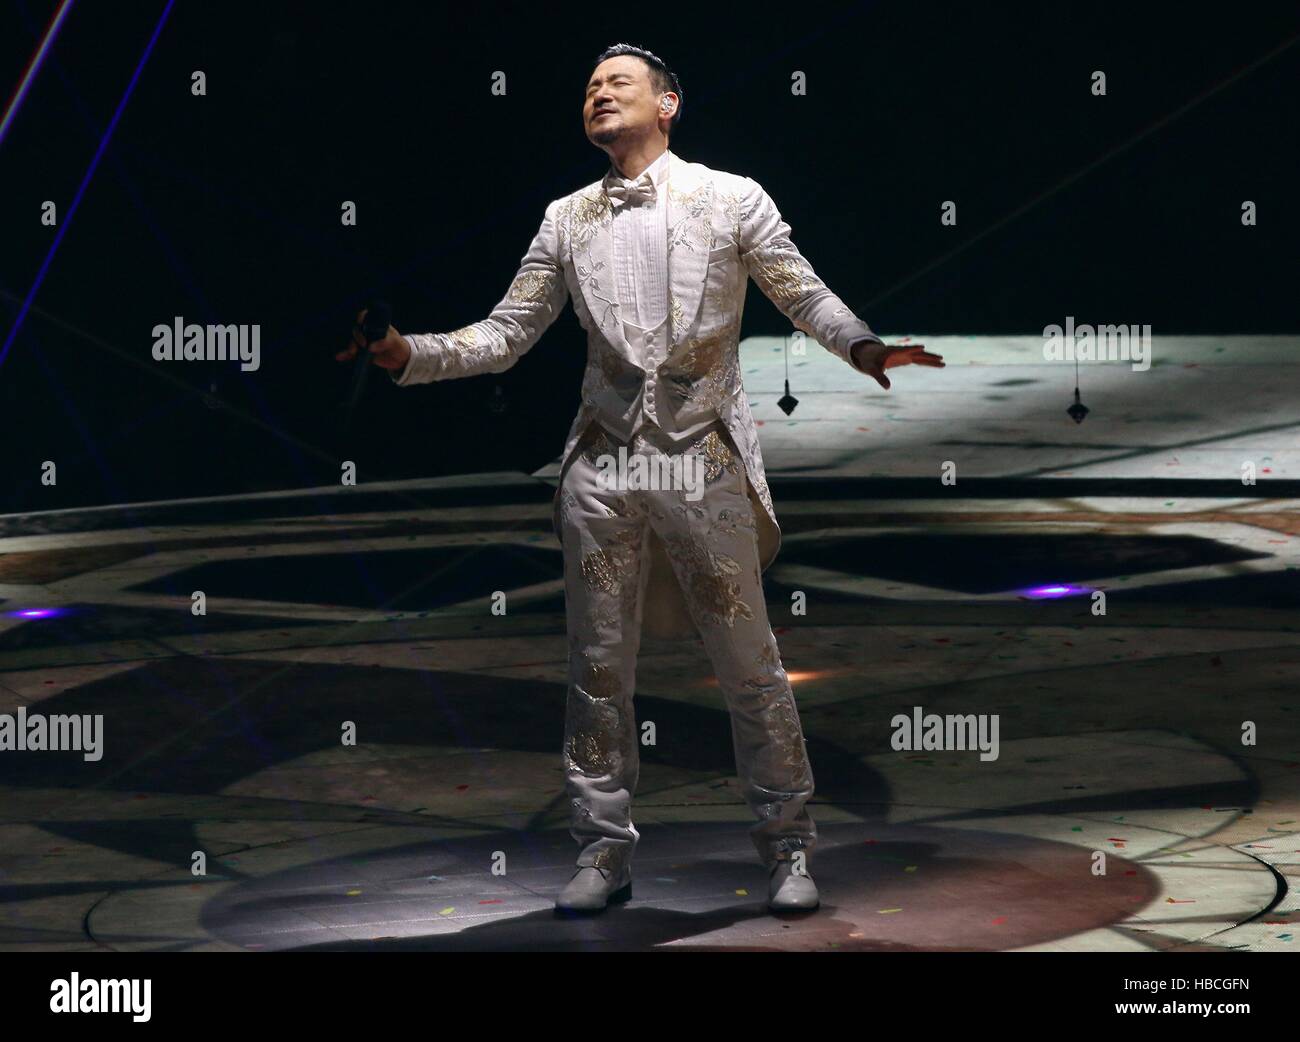 Hong Kong, China. 5th Dec, 2016. Singer Jacky Cheung performs during his world tour concert 'A Classic Tour' in Hong Kong, south China, Dec. 5, 2016. © Wang Xi/Xinhua/Alamy Live News Stock Photo